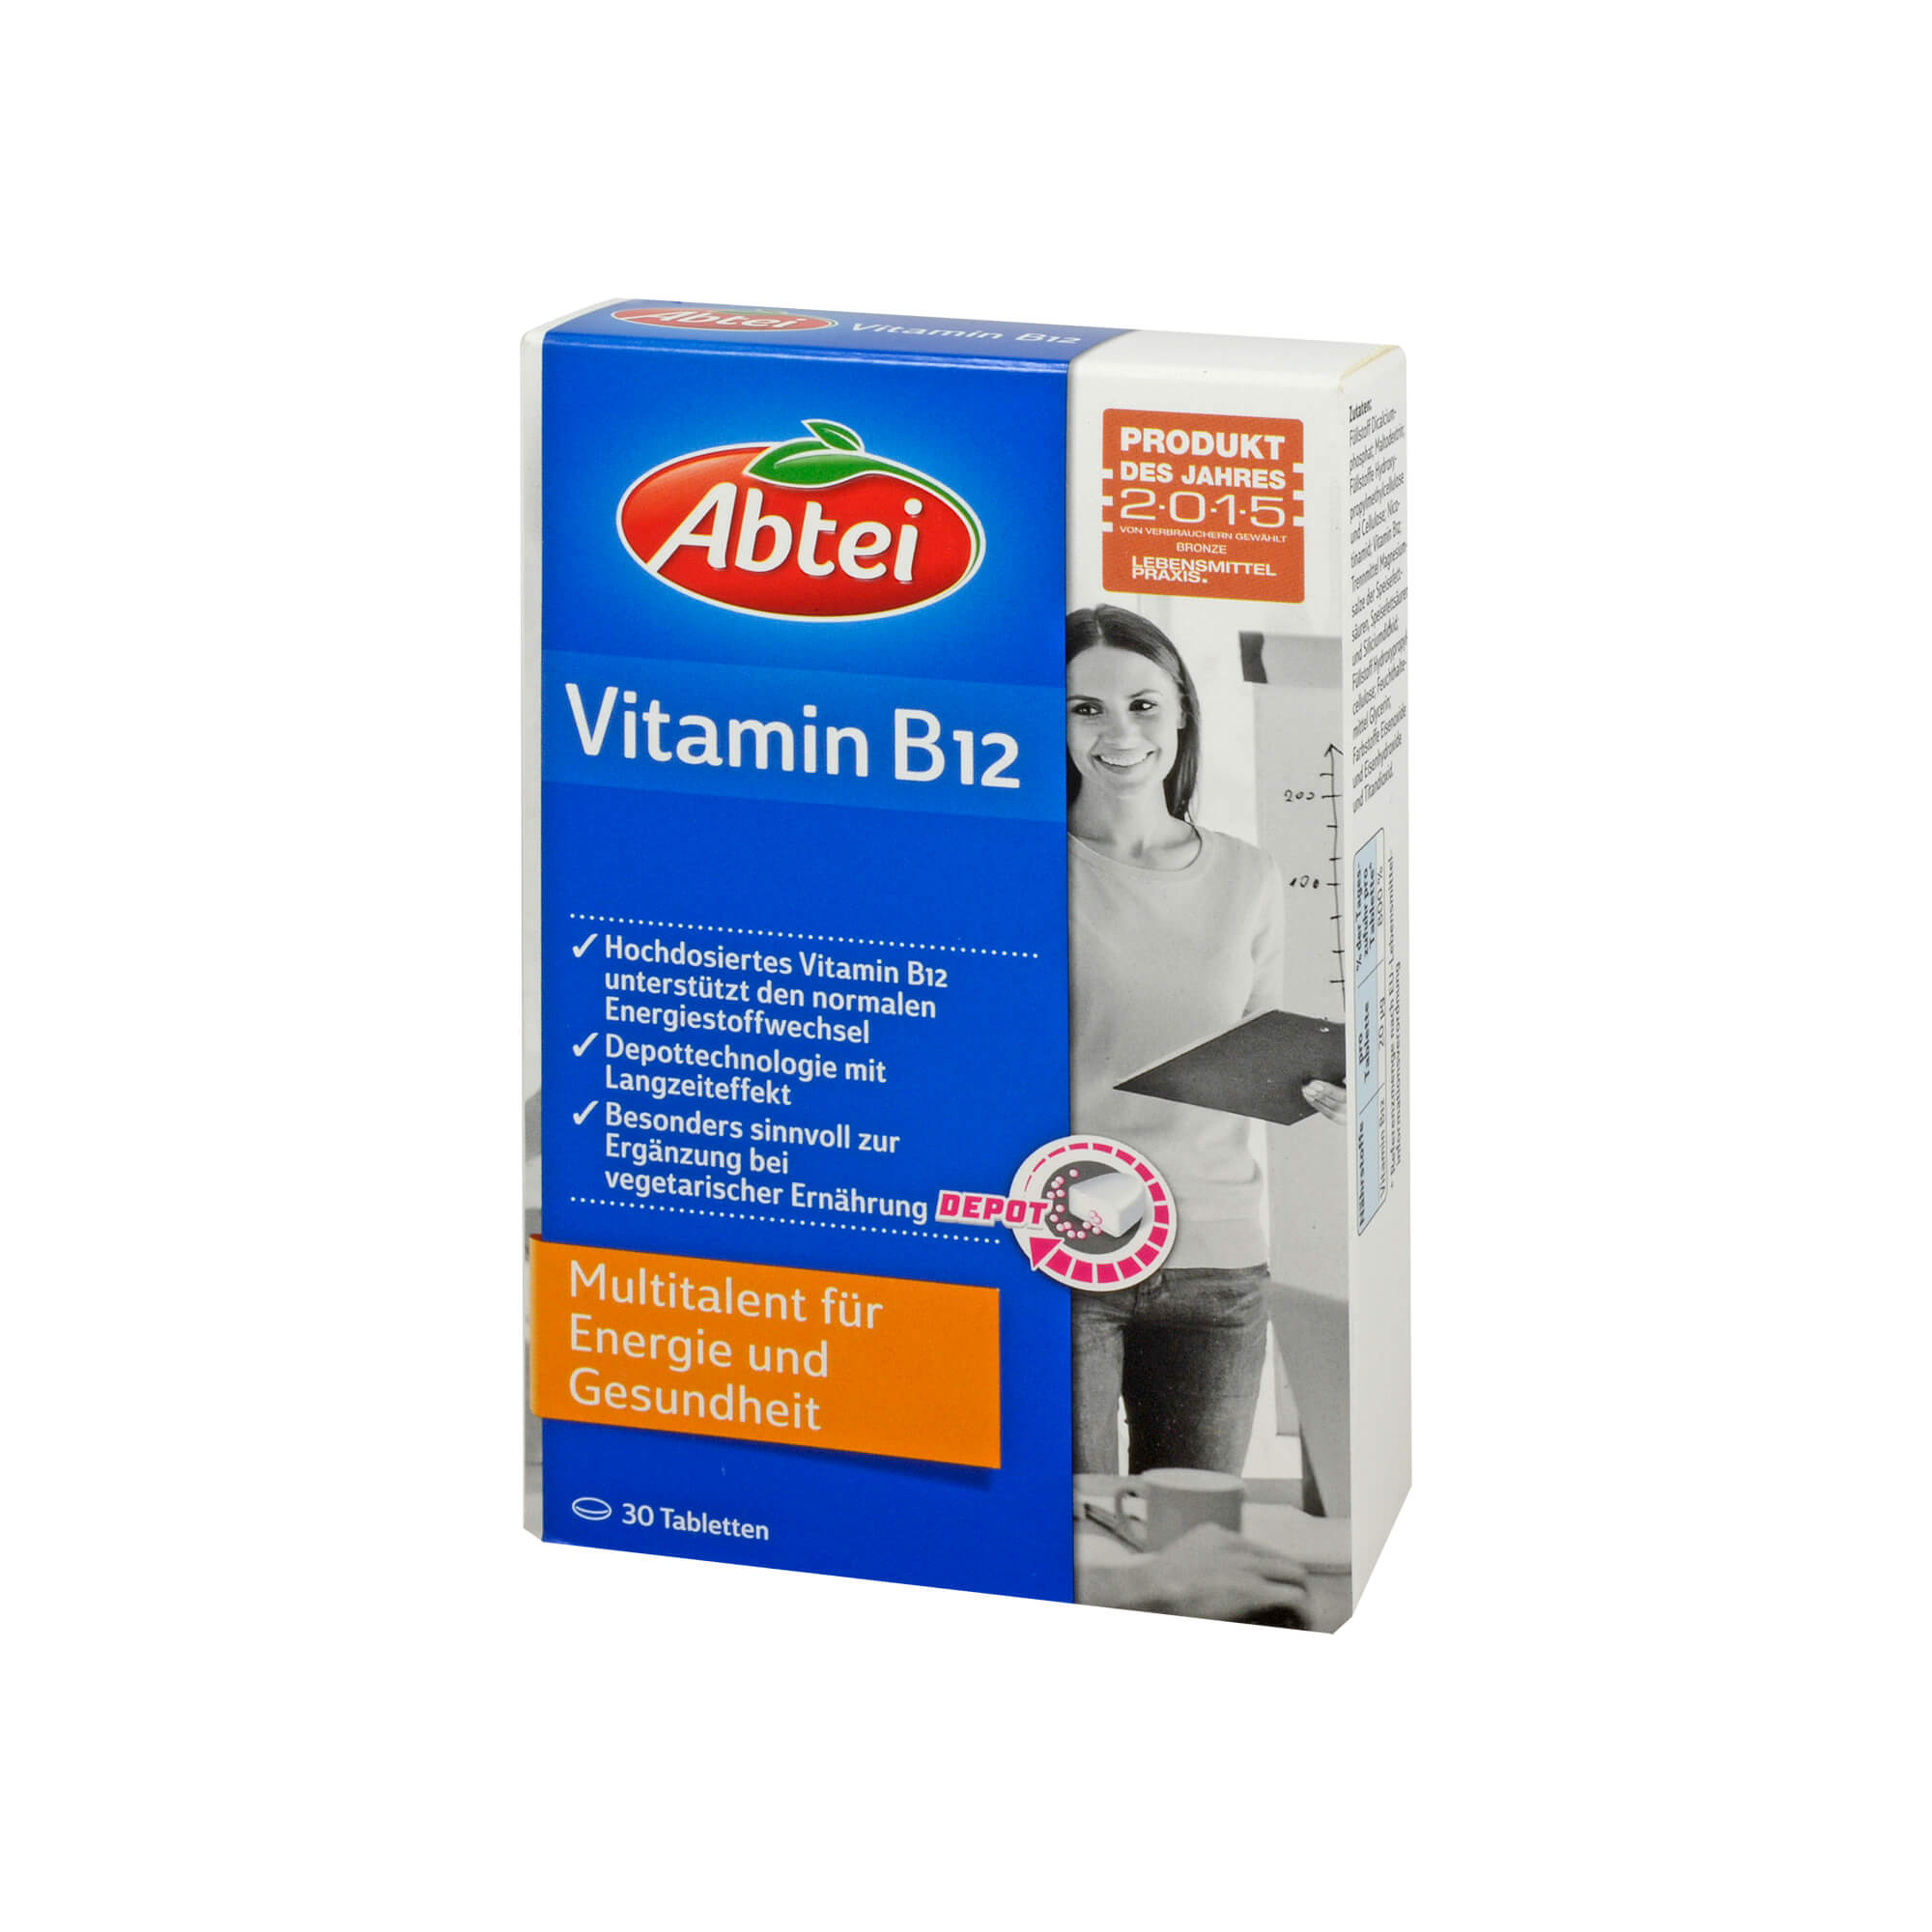 Nahrungsergänzungsmittel mit Vitamin B12.